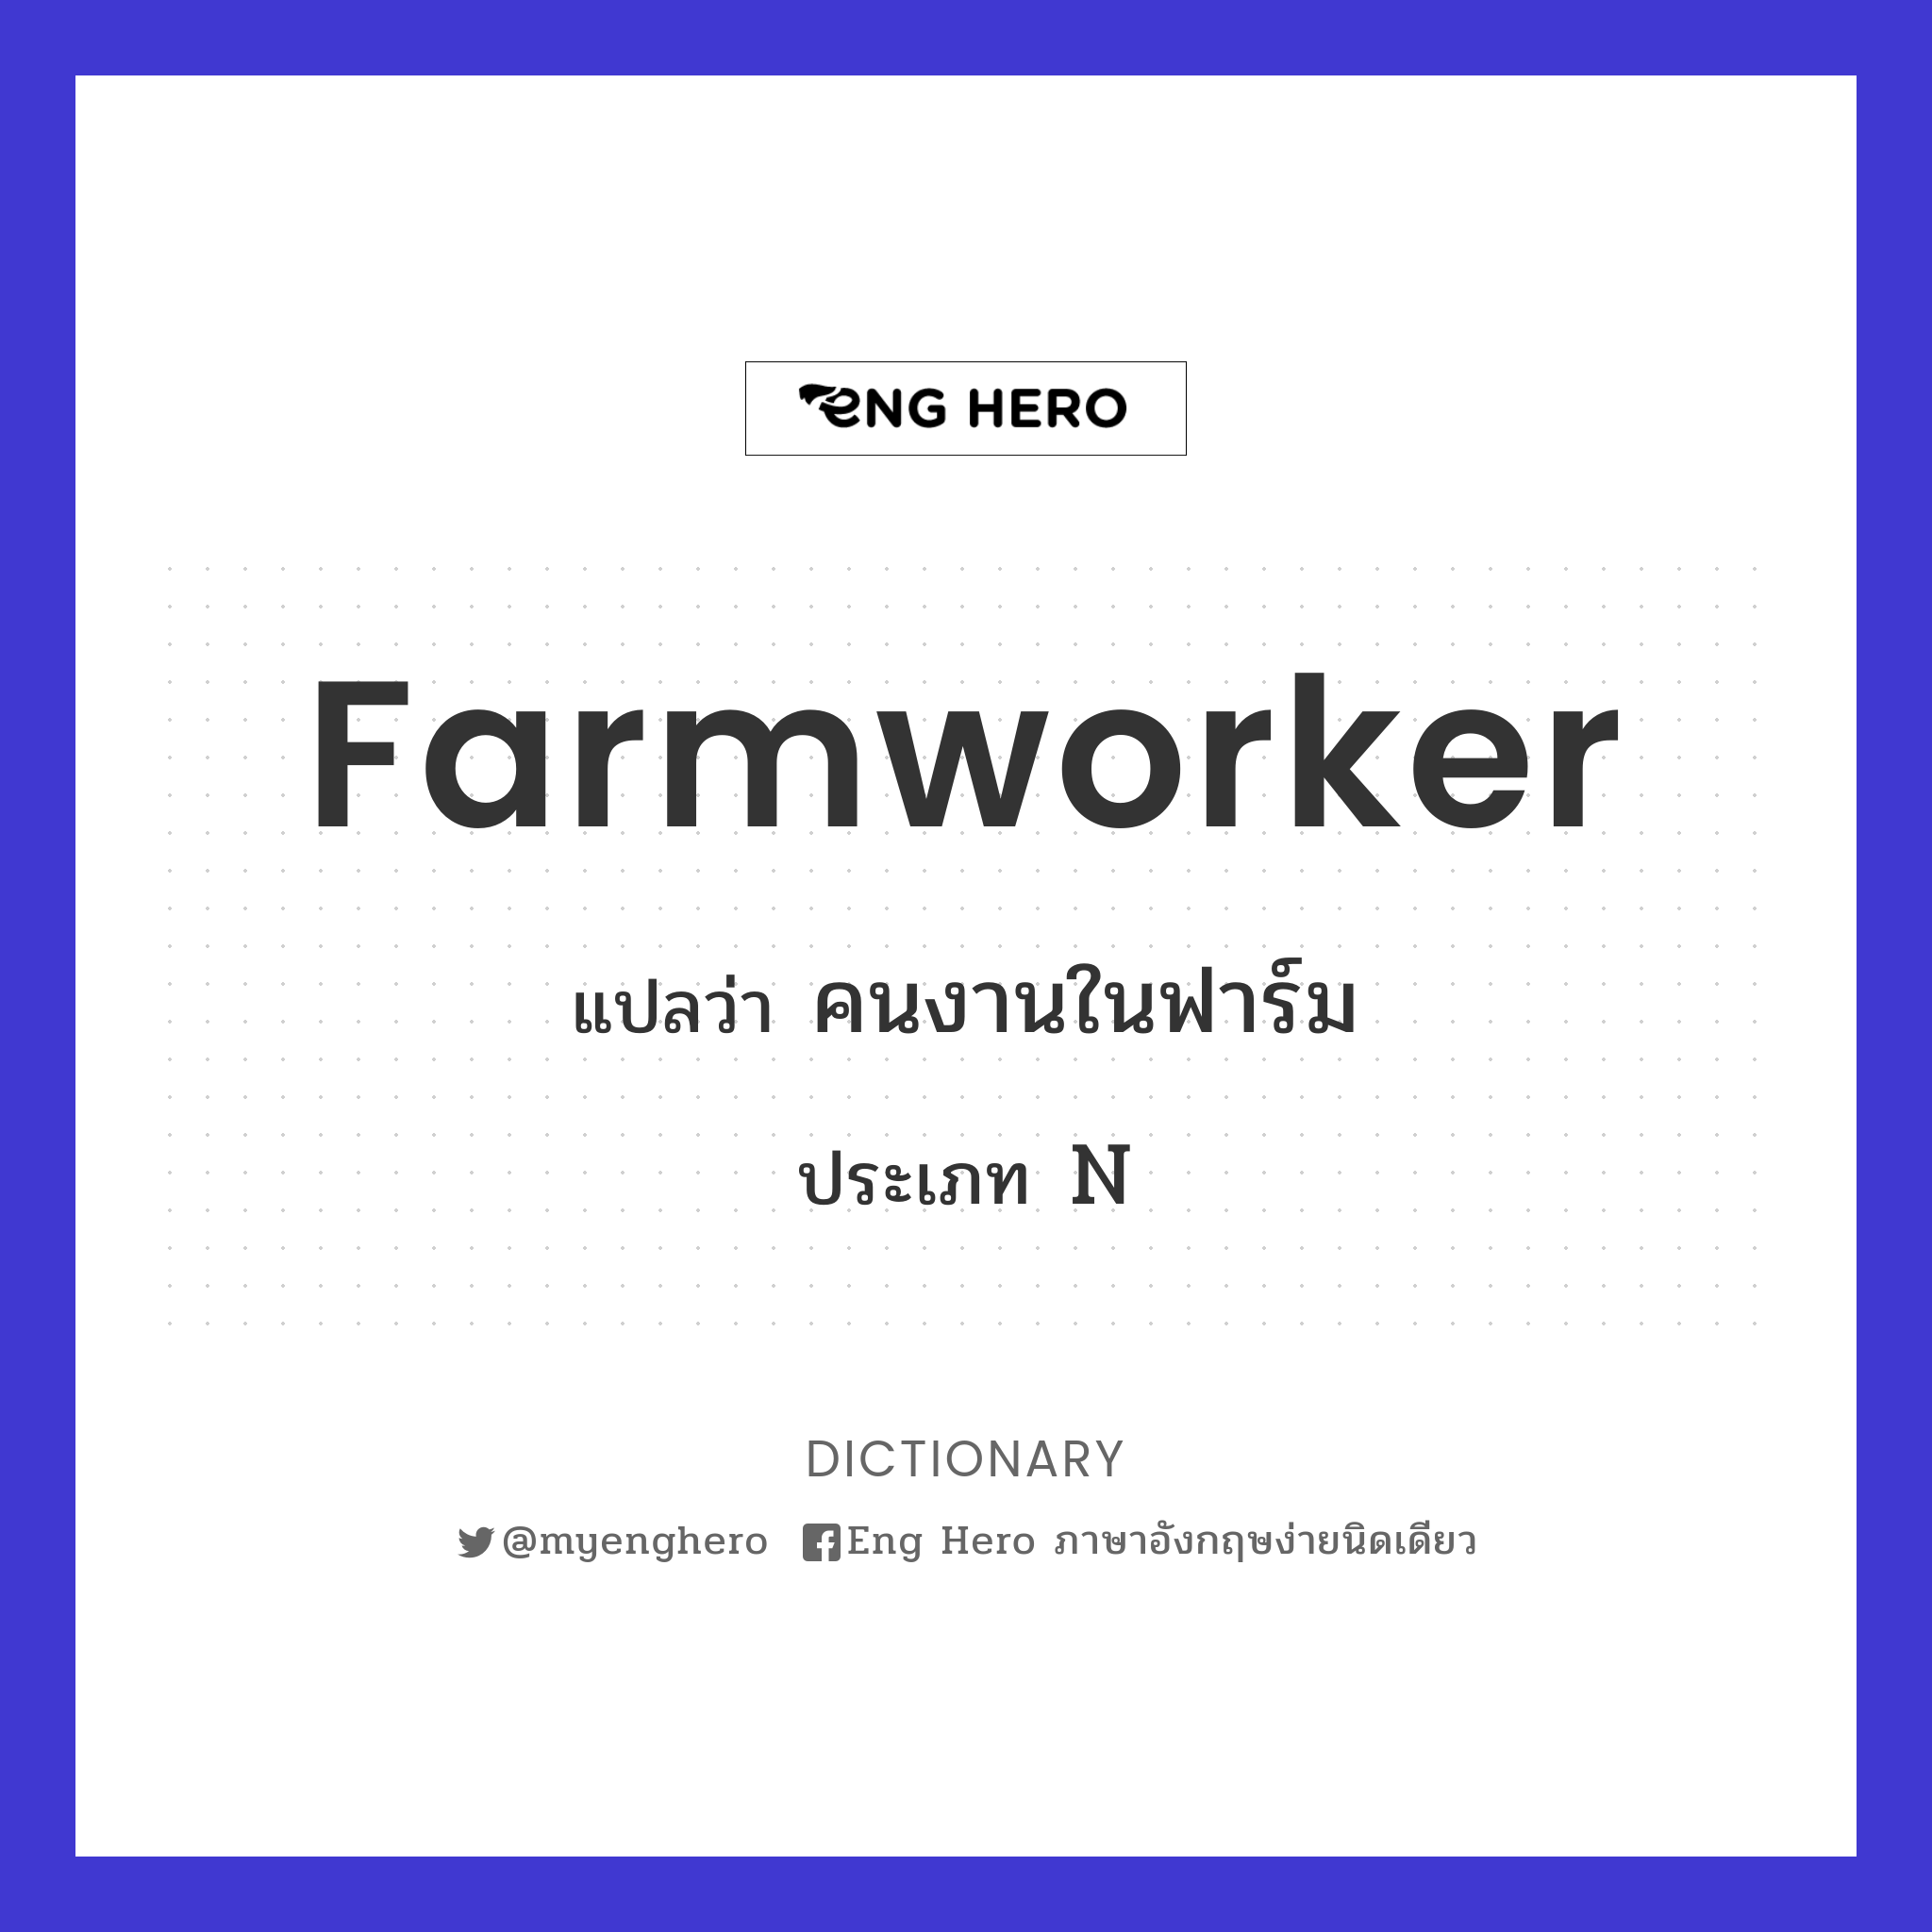 farmworker